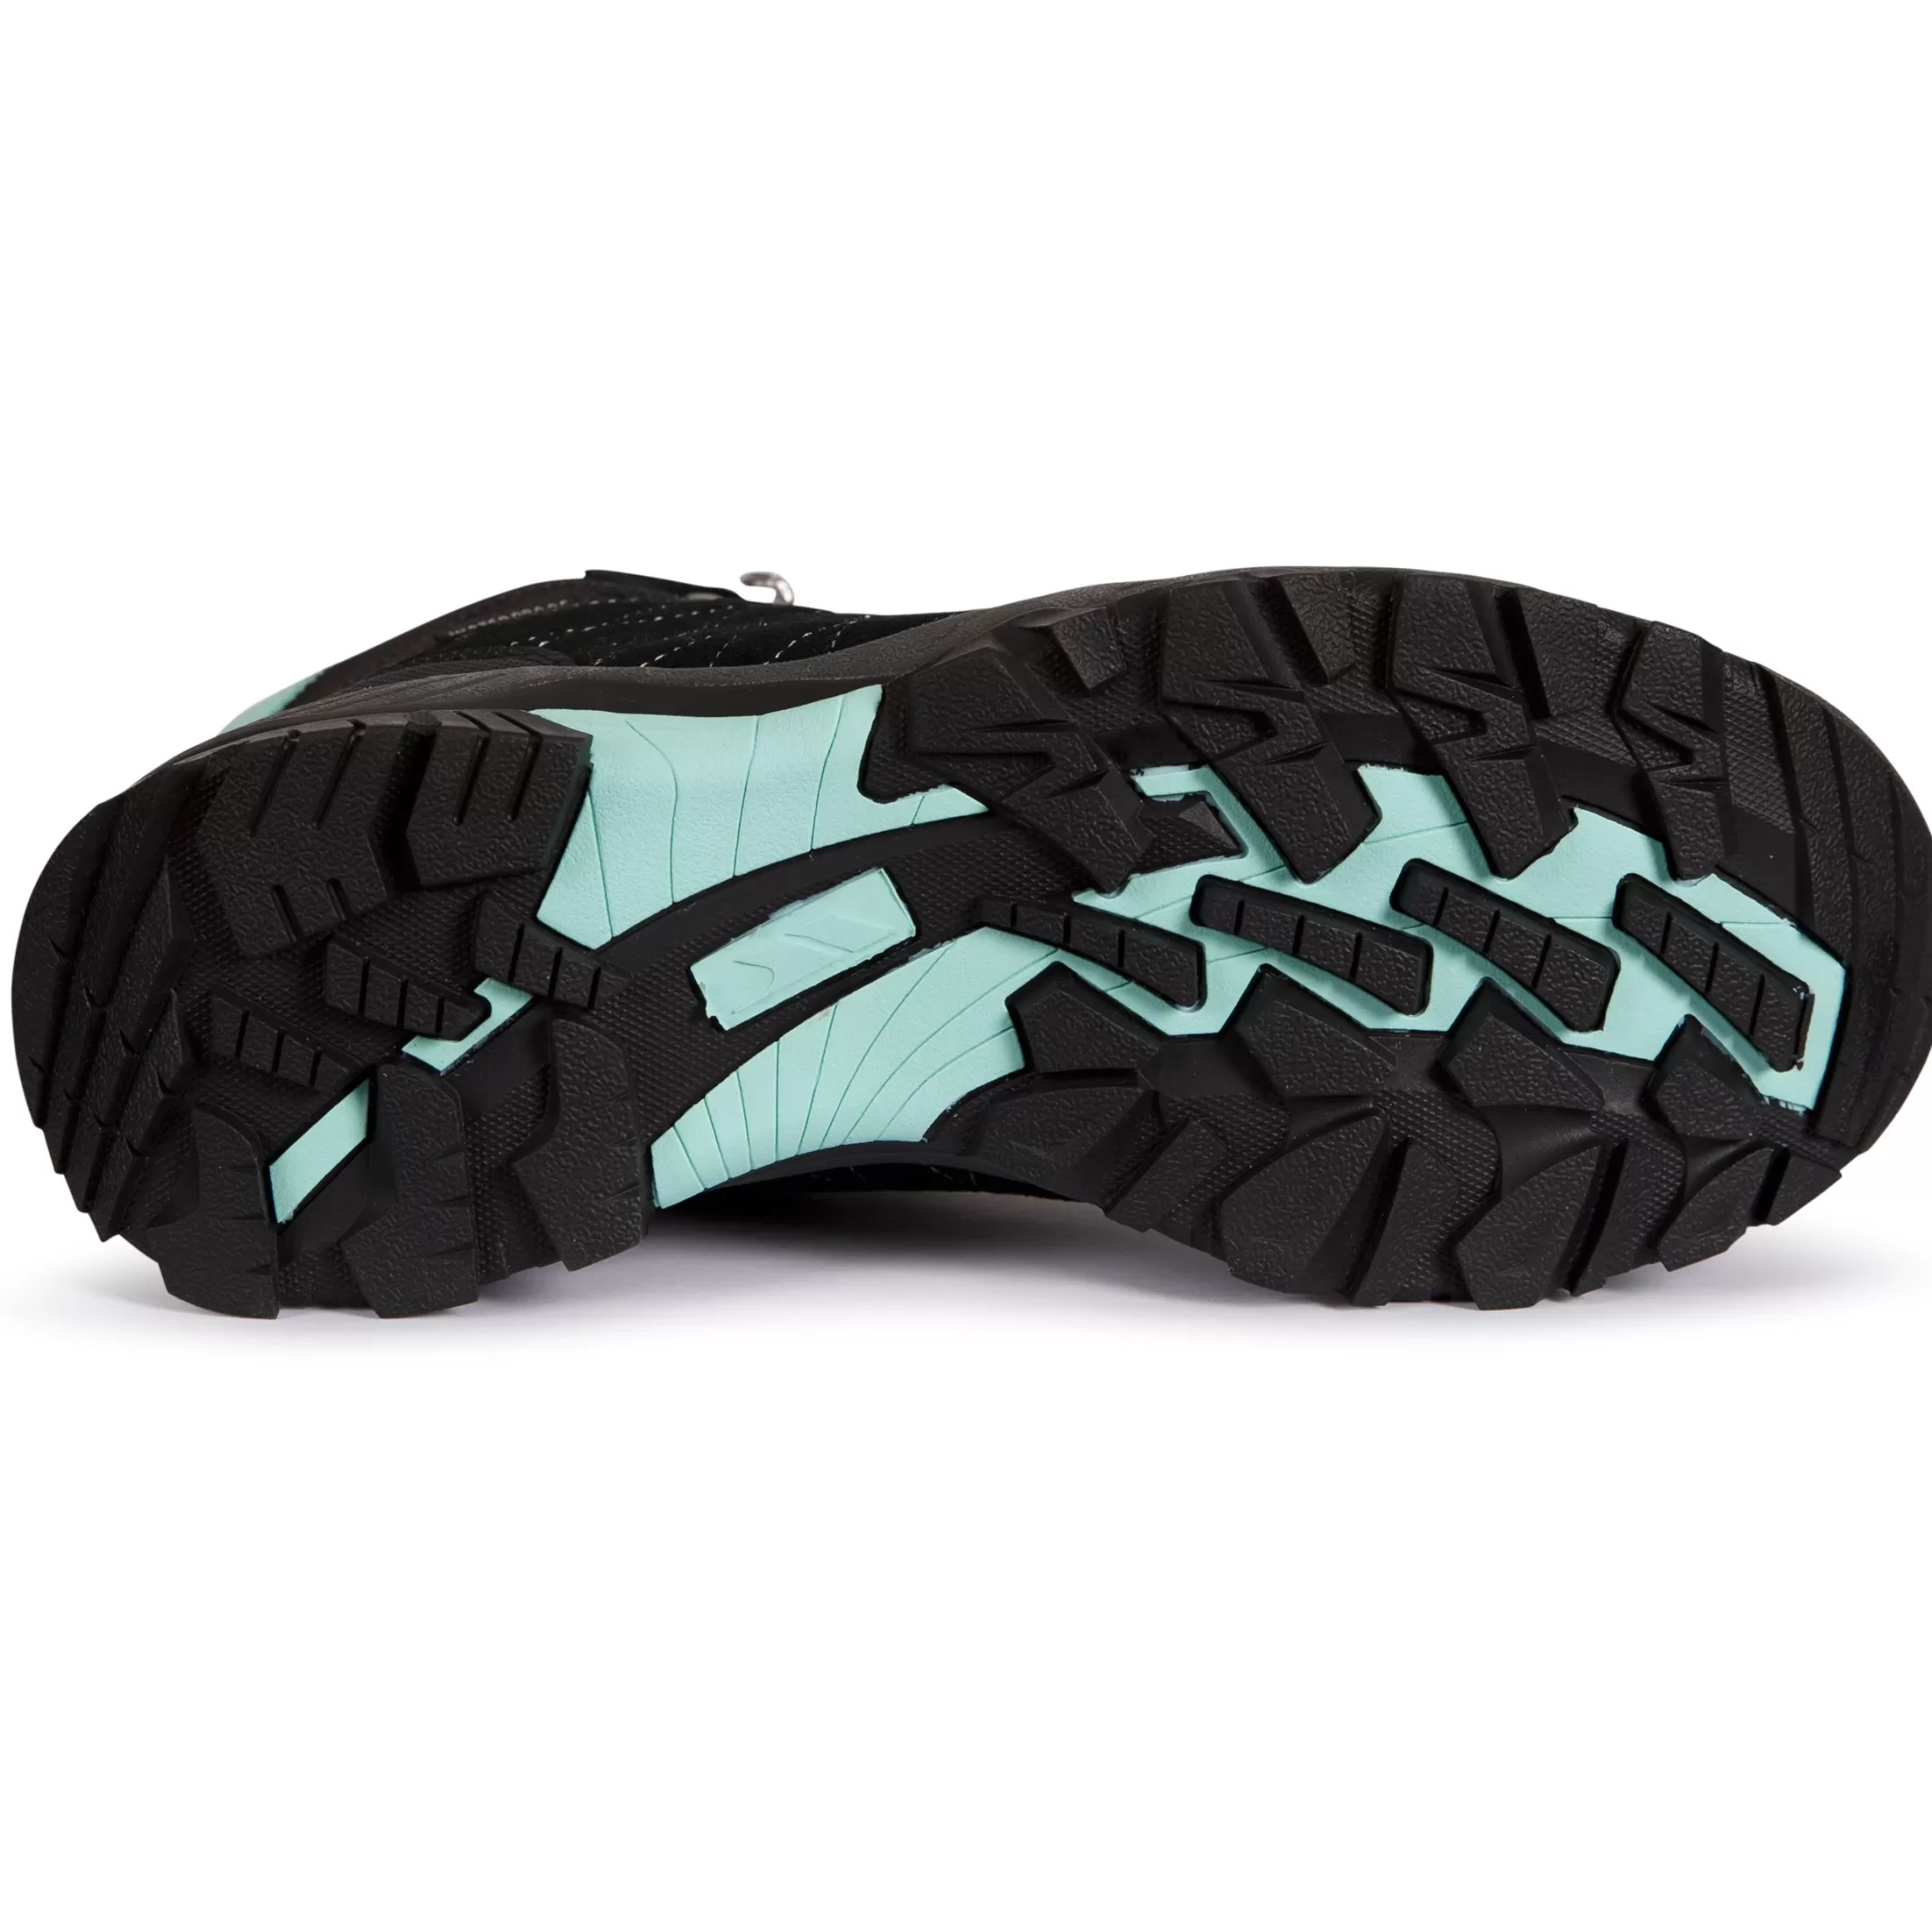 Womens Waterproof Walking Boots Torri | Trespass Store